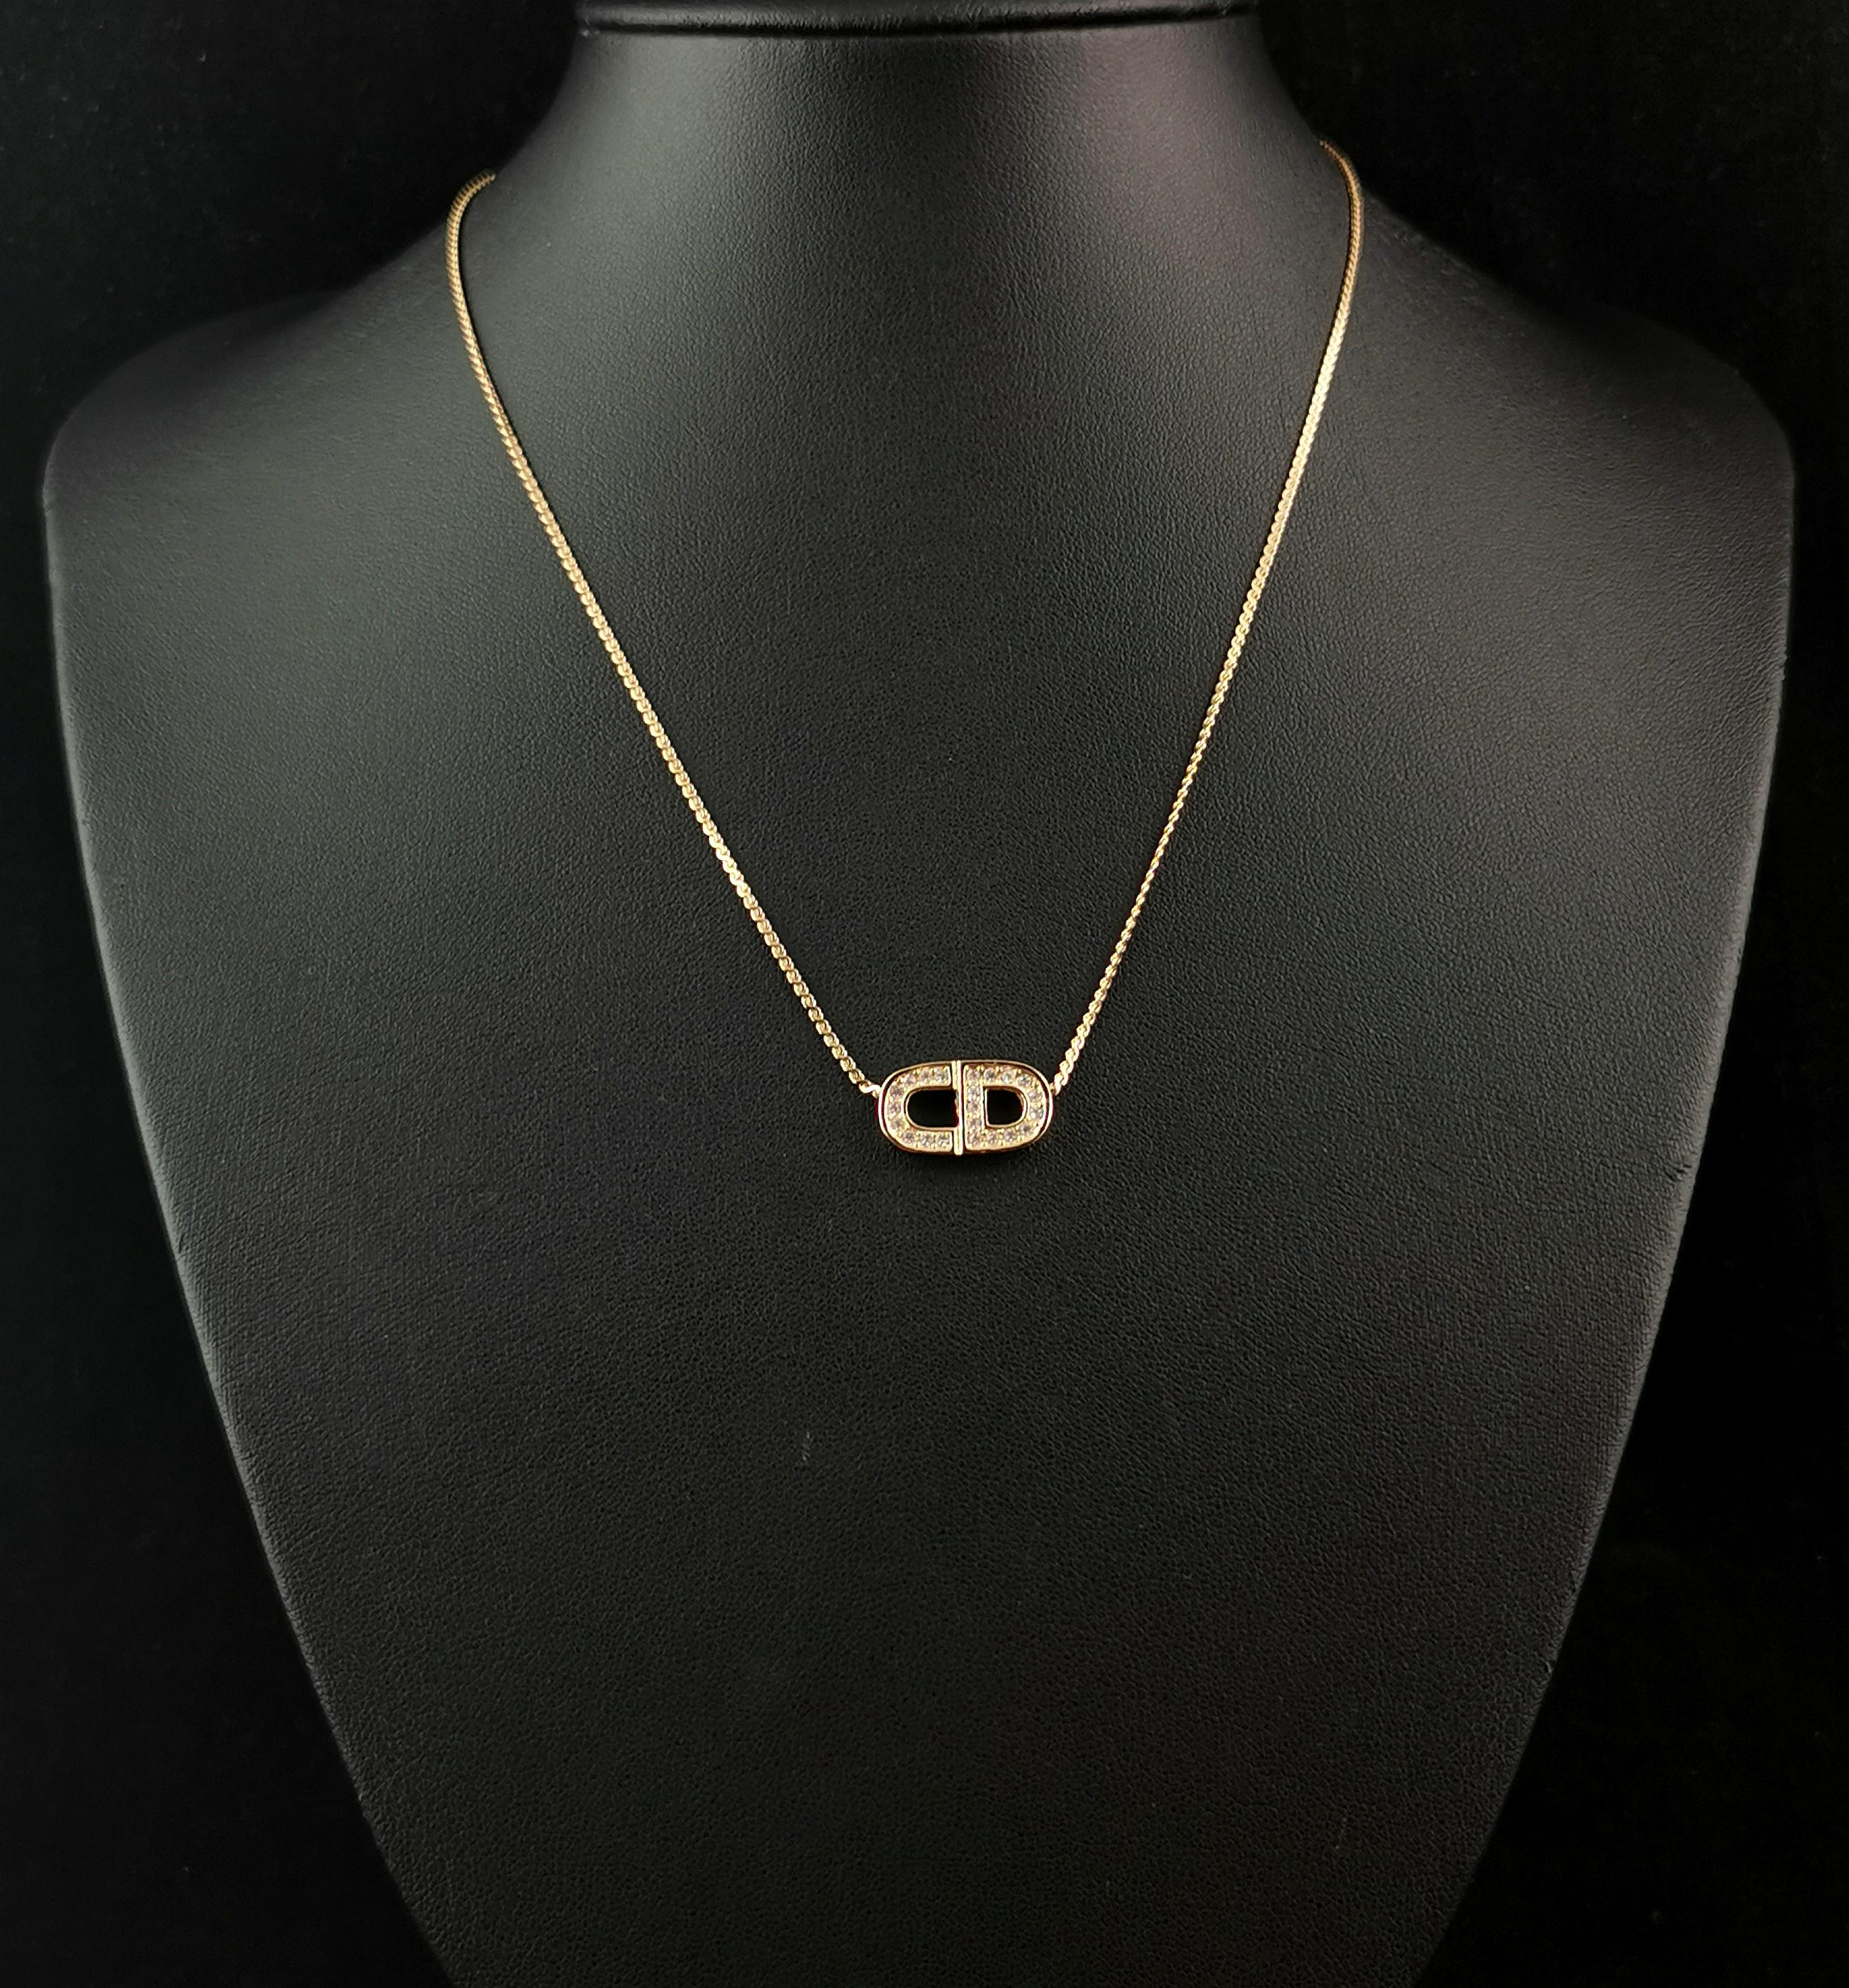  Vintage Christian Dior gold tone diamante logo pendant necklace  For Sale 5